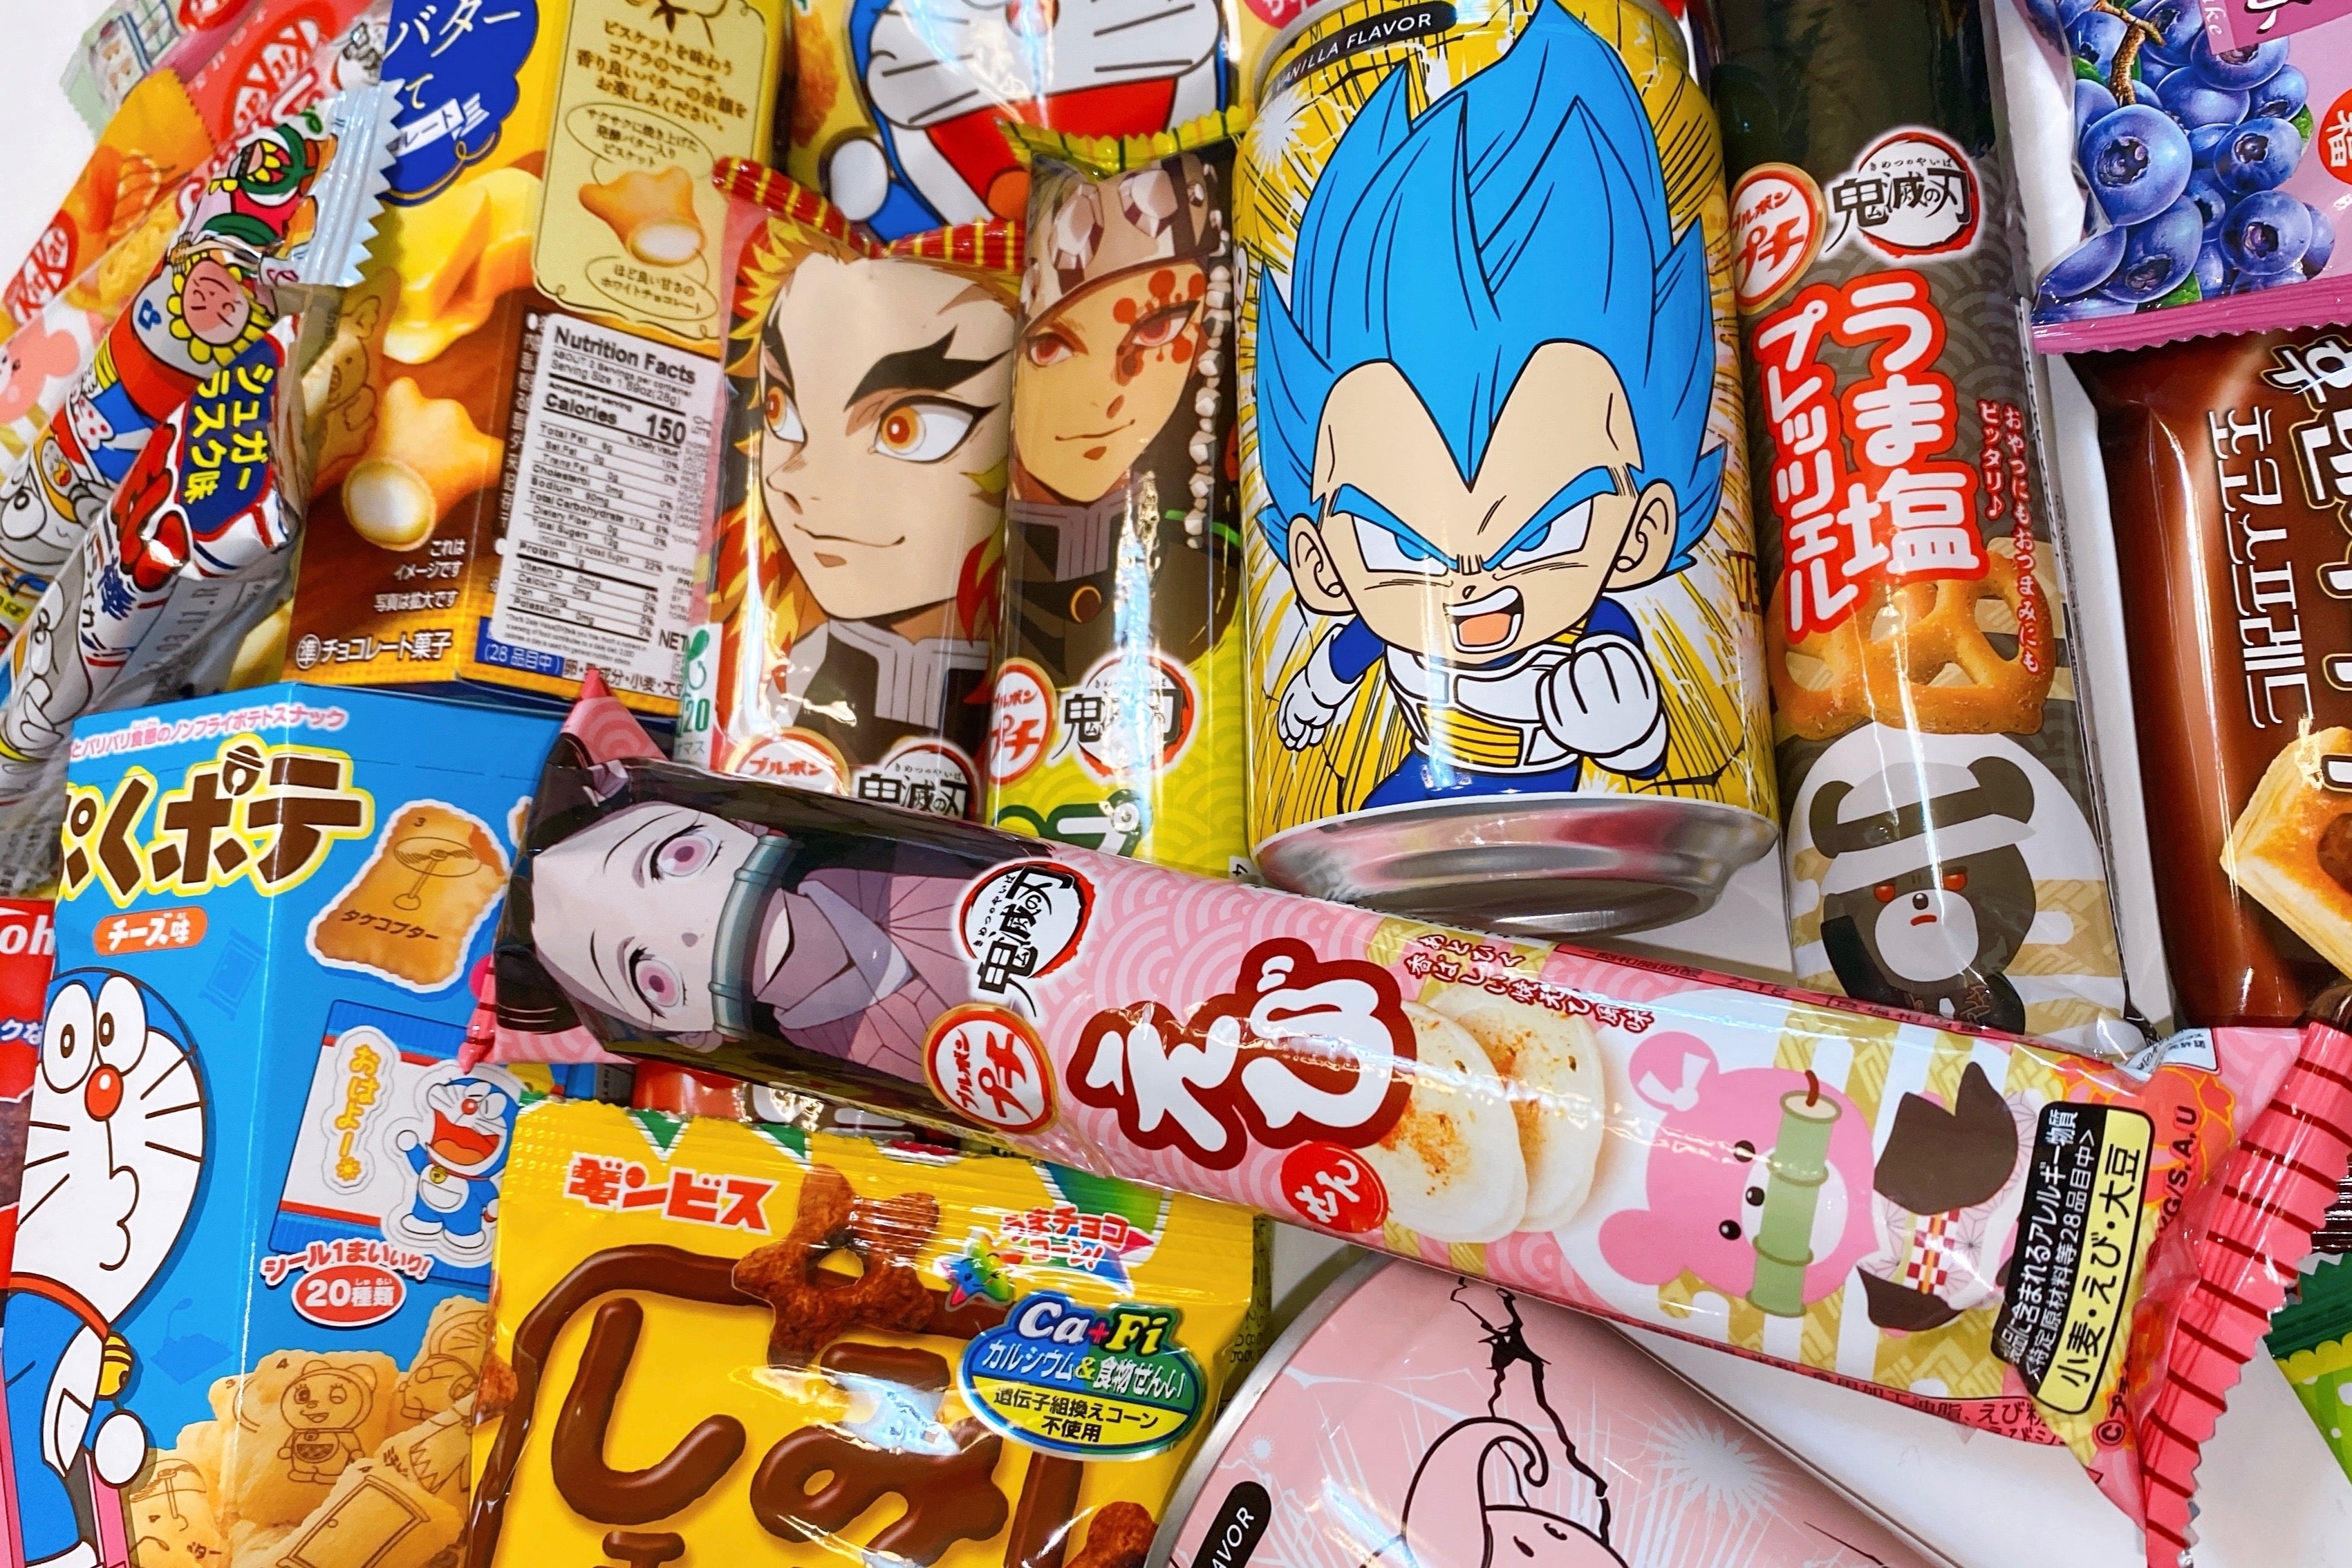 Snack Basue Anime Adaptation Announced